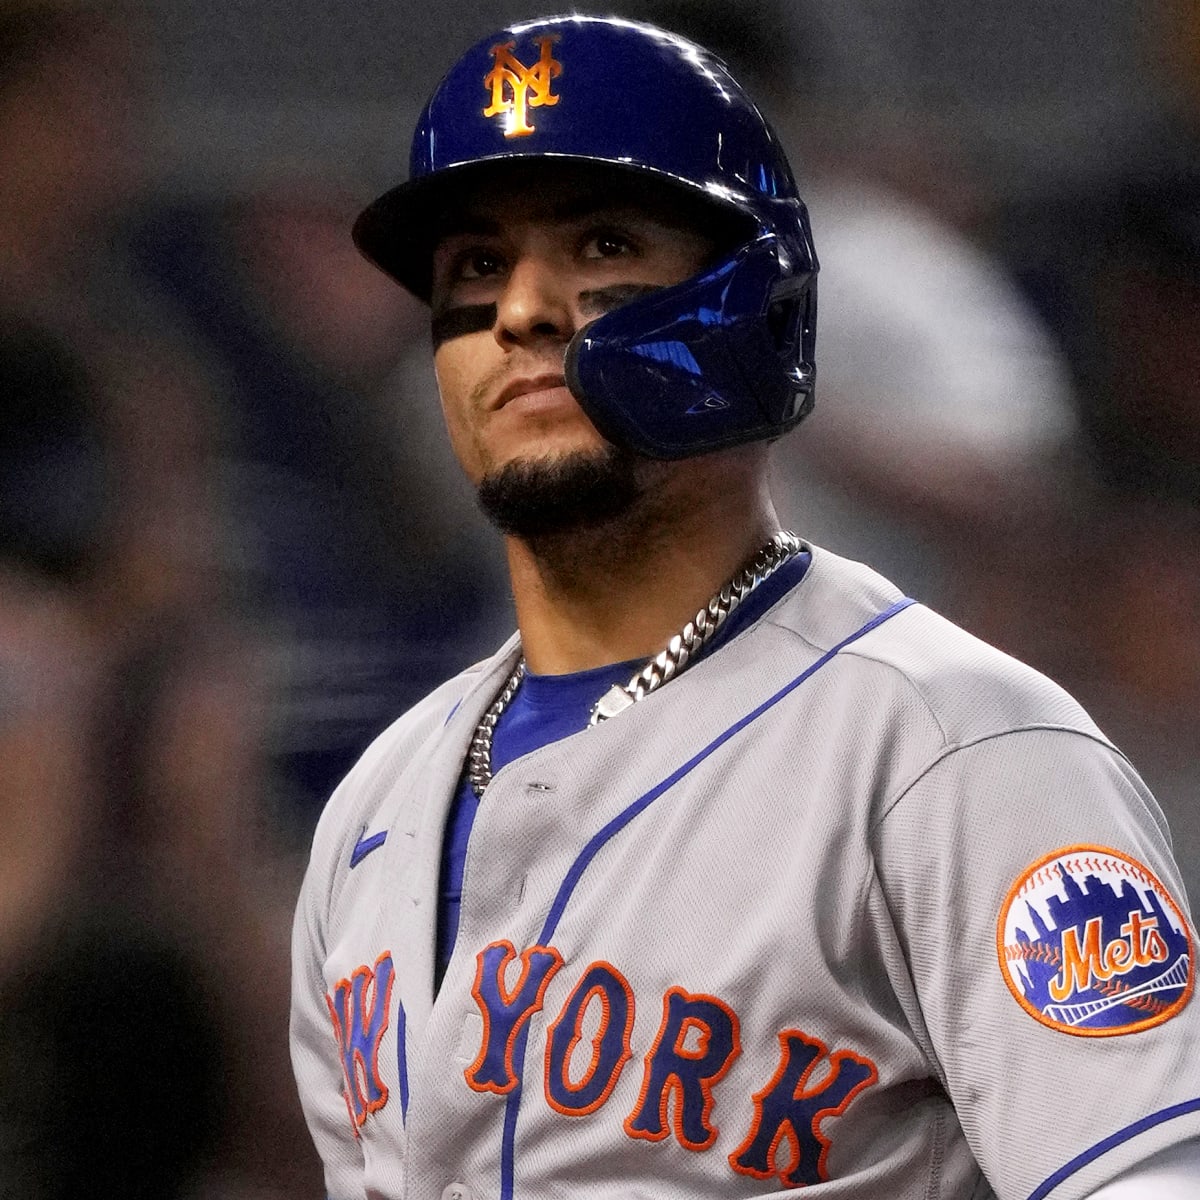 NY Mets: Convincing win snaps seven-game losing streak in Atlanta